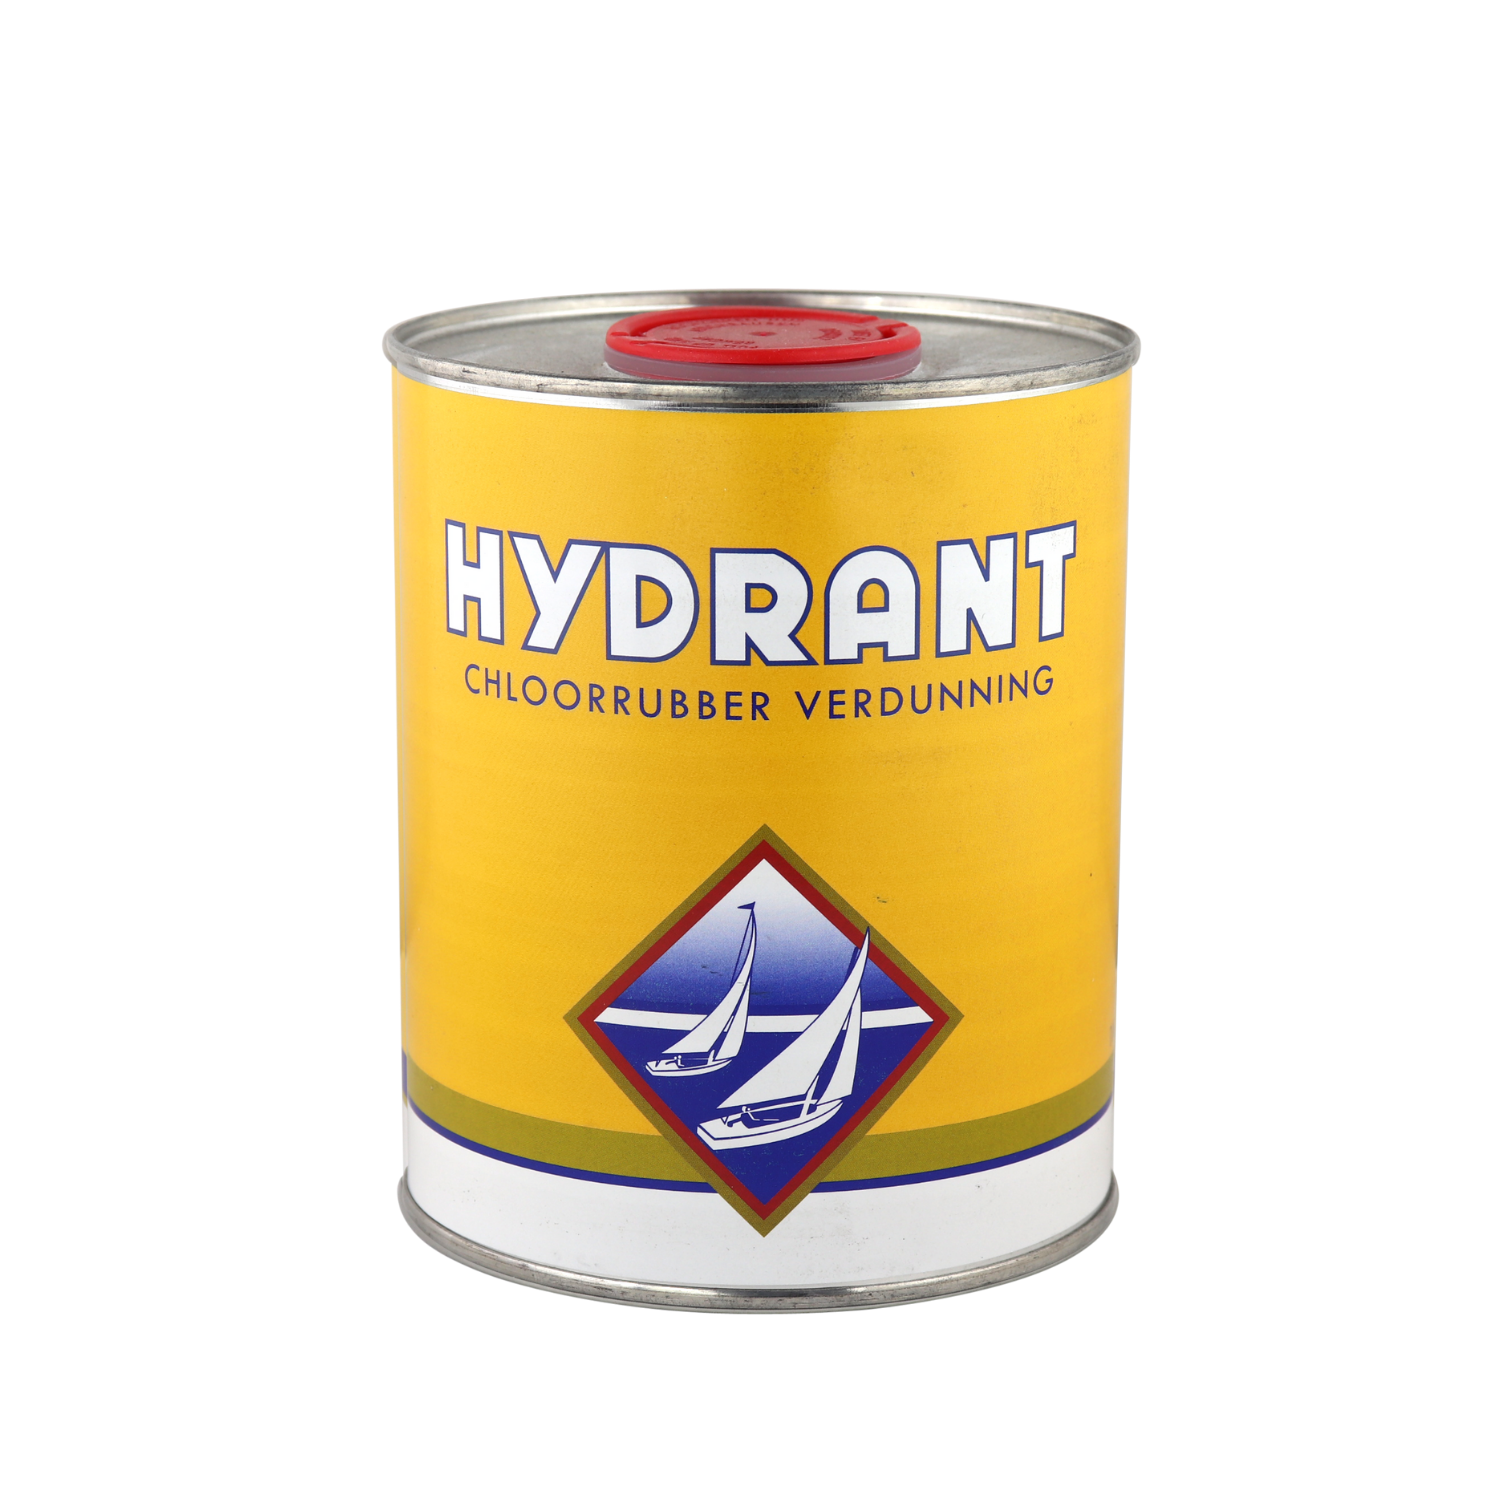 Hydrant chloorrubber verdunning2